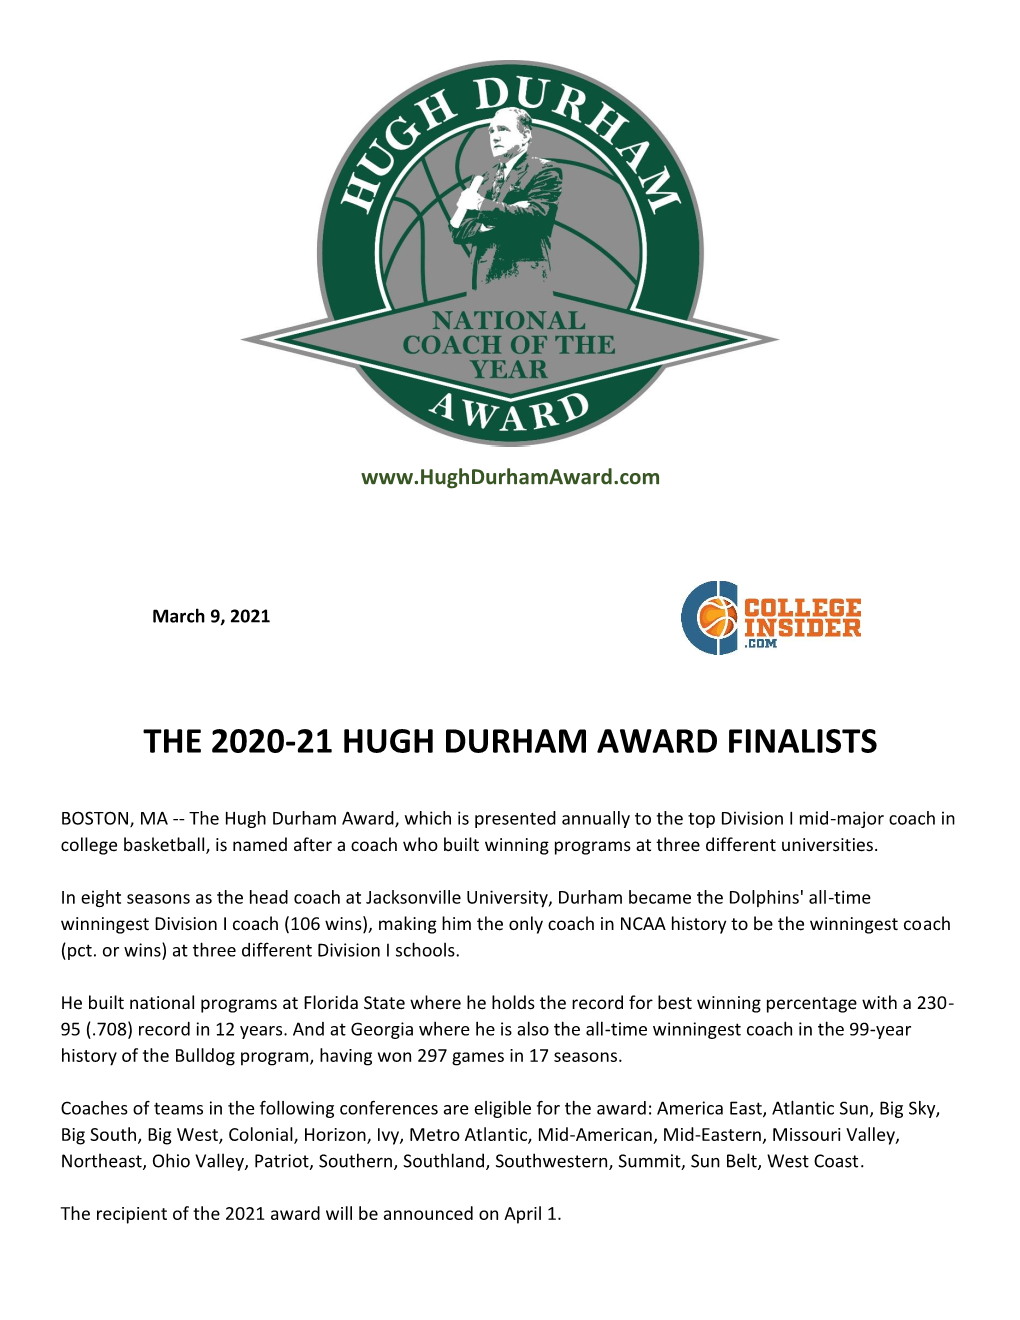 The 2020-21 Hugh Durham Award Finalists